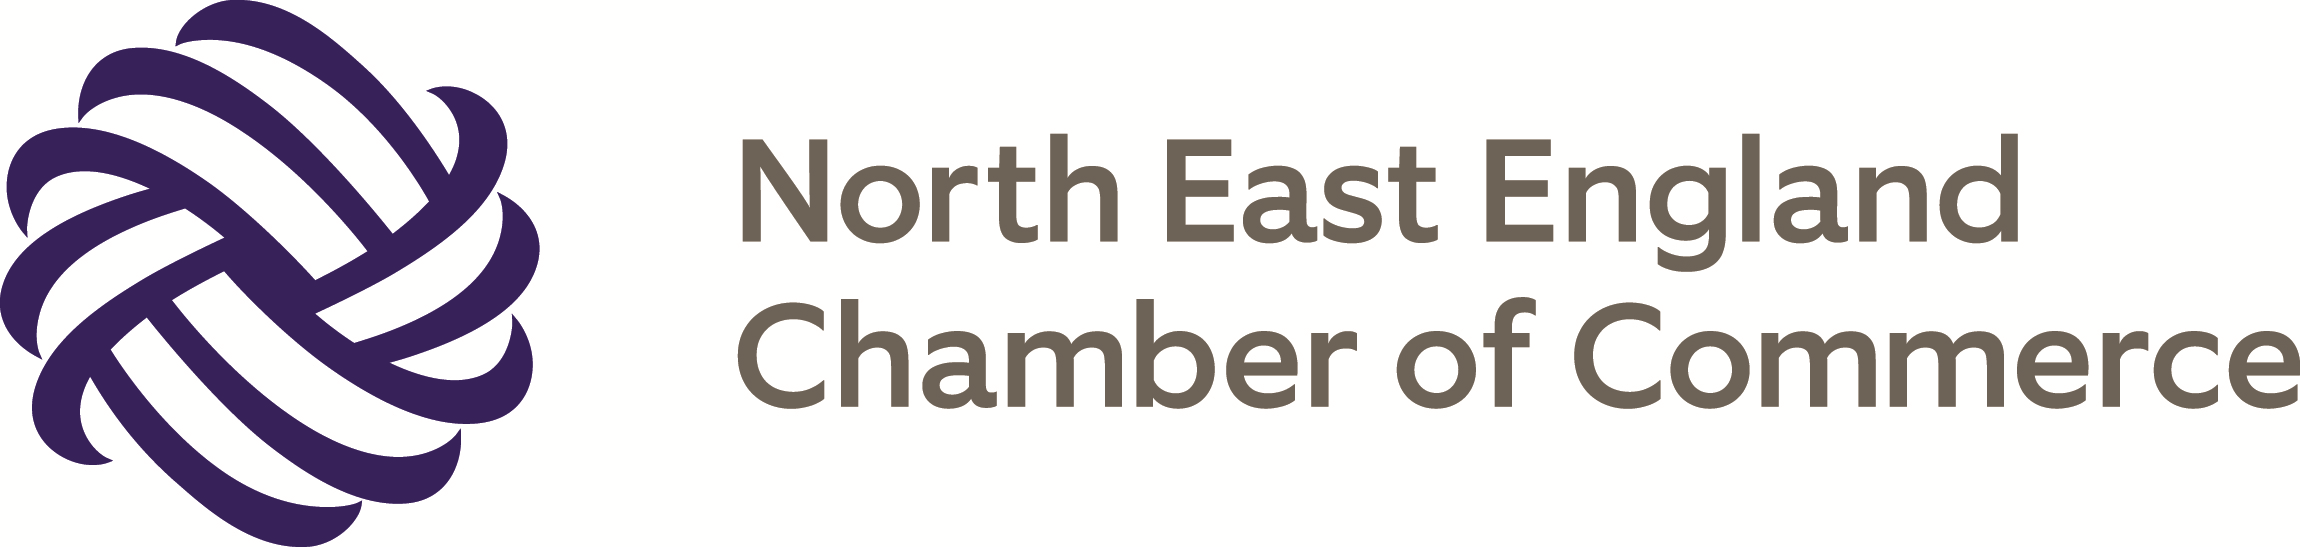 NECC - North East England Chamber of Commerce Logo